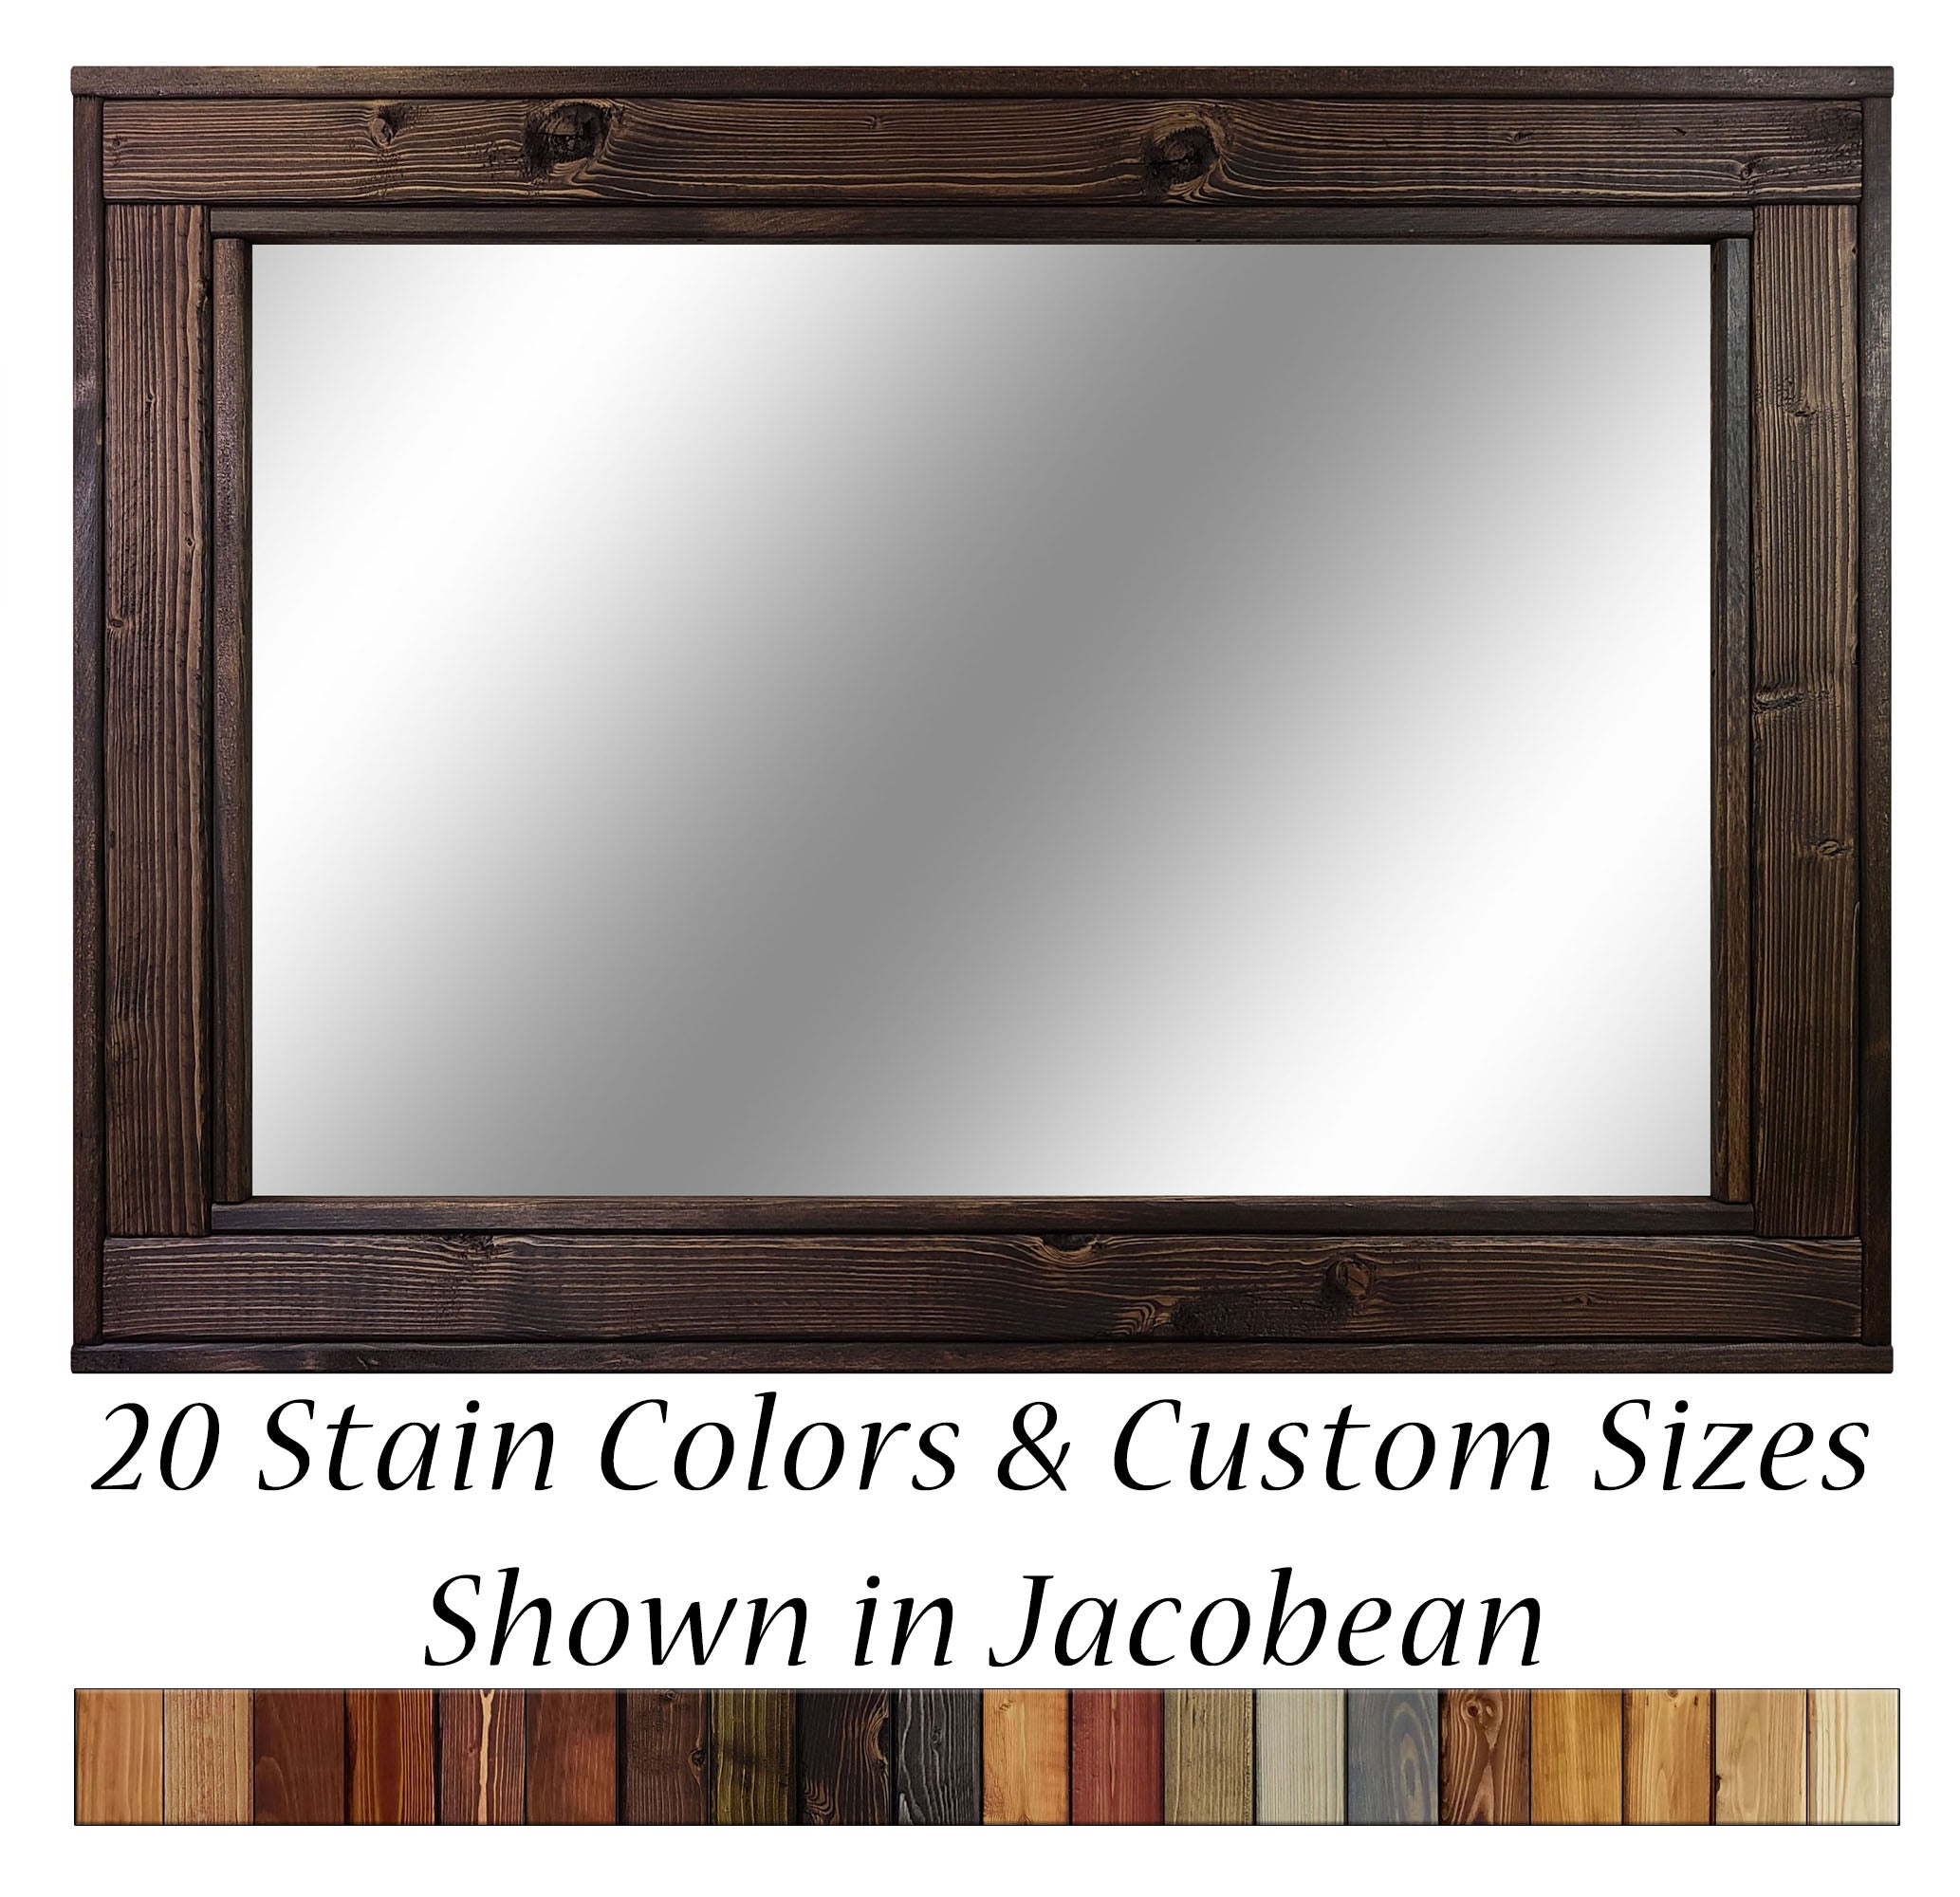 Herringbone Reclaimed Styled Wood Mirror, 20 Stain Colors & Custom Sizes, Shown in Jacobean